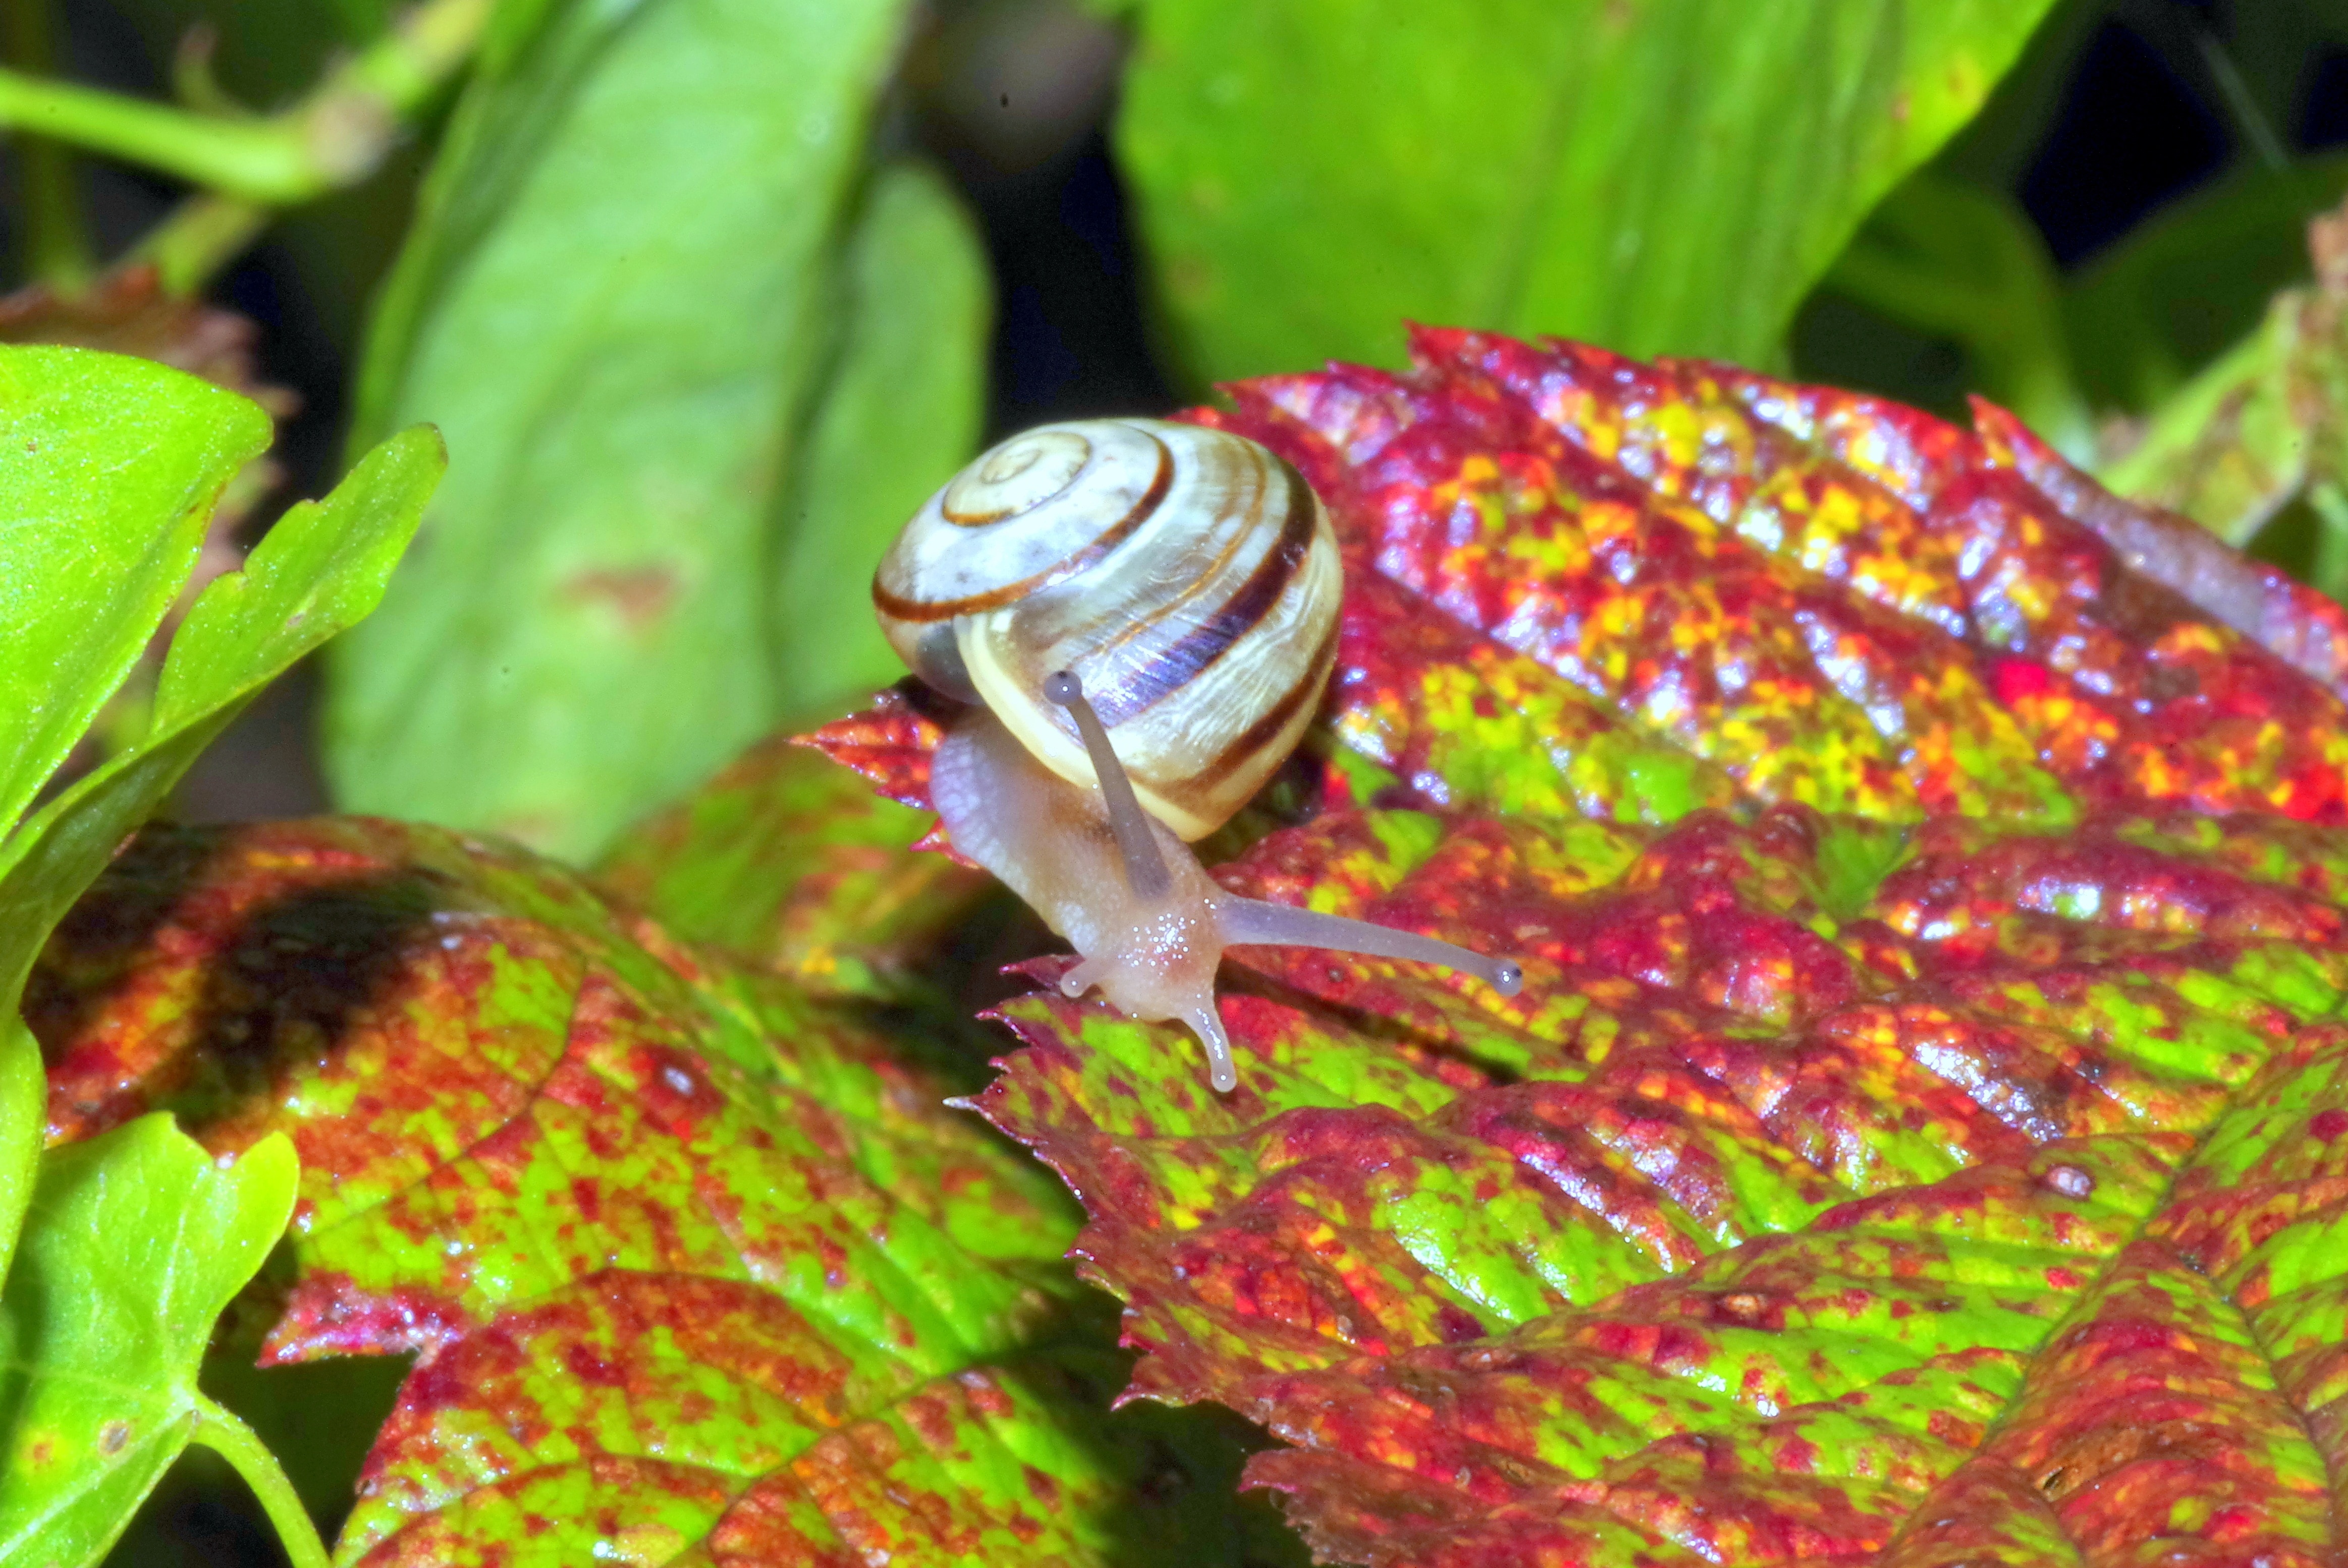 snail on leaf during daytime